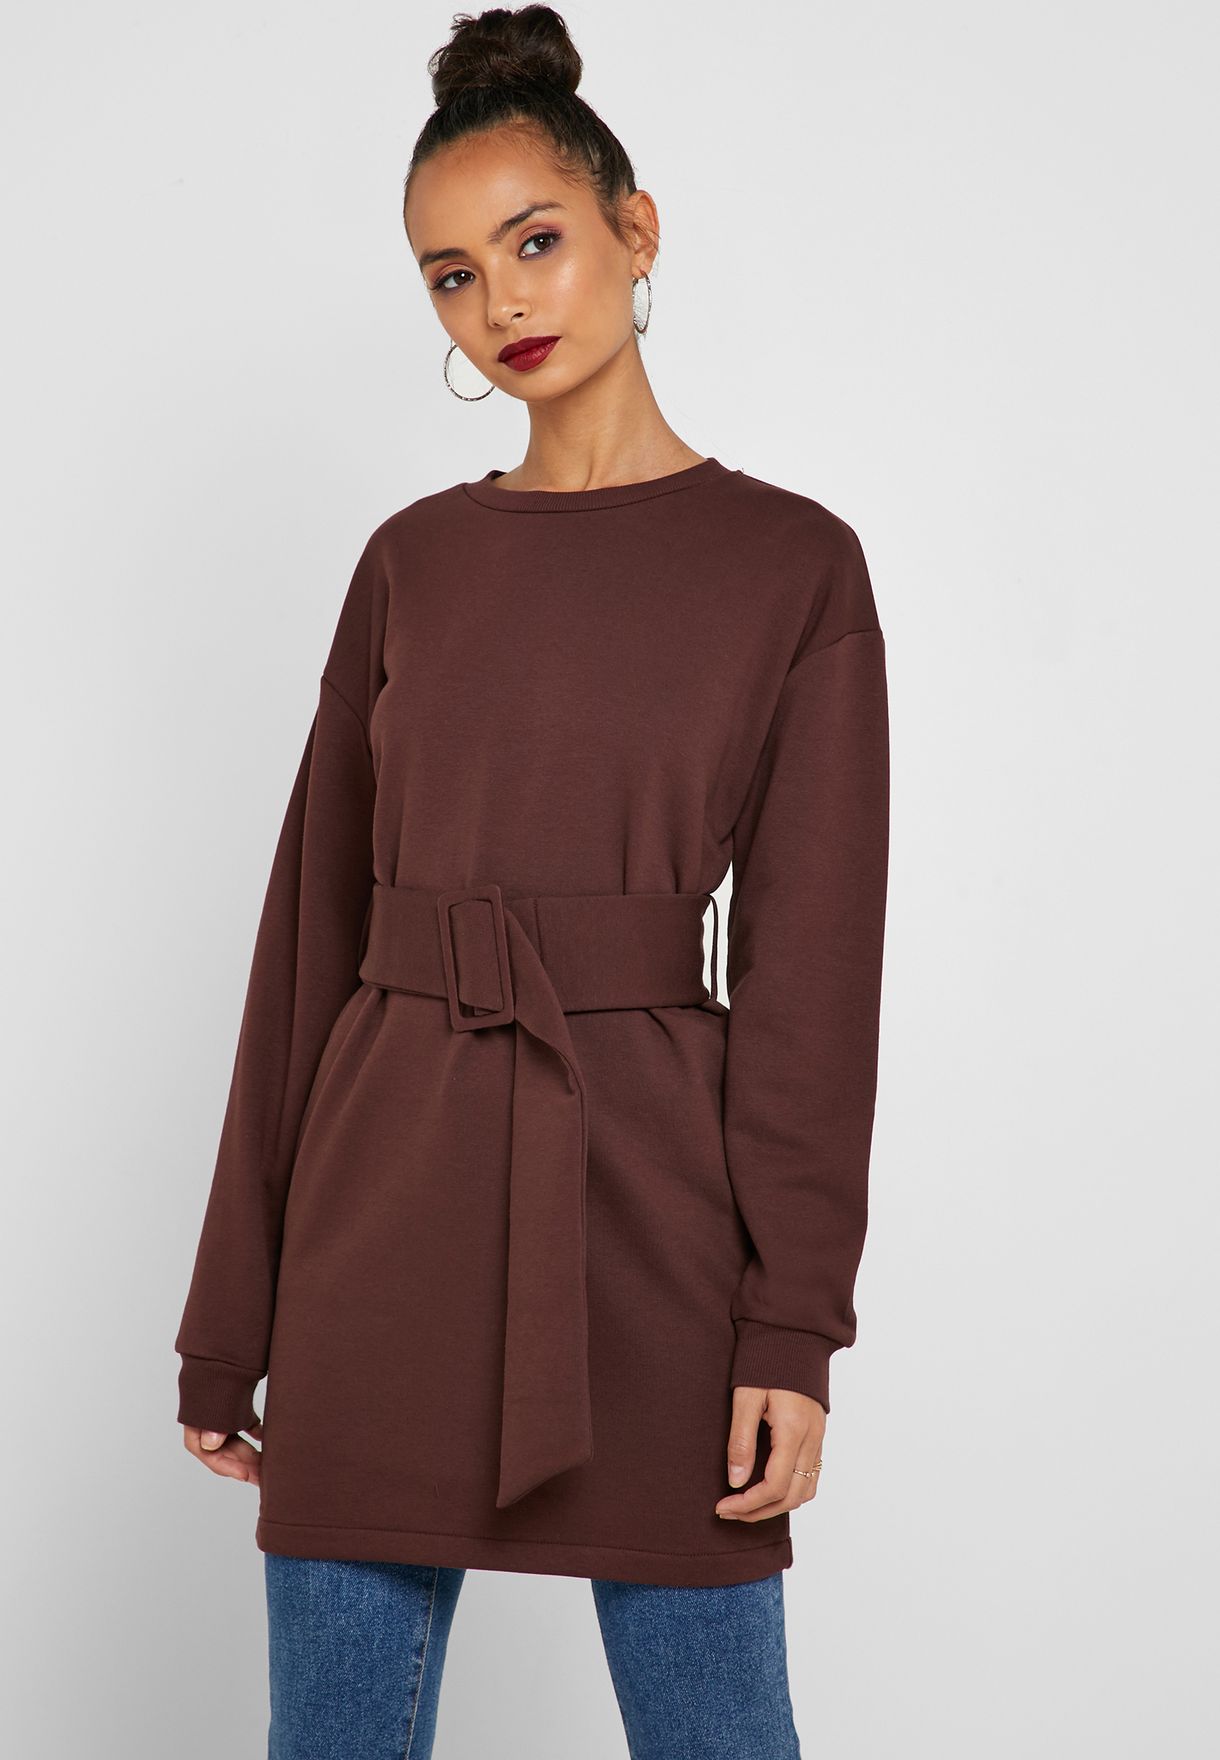 Topshop brown Belted Sweatshirt Dress 